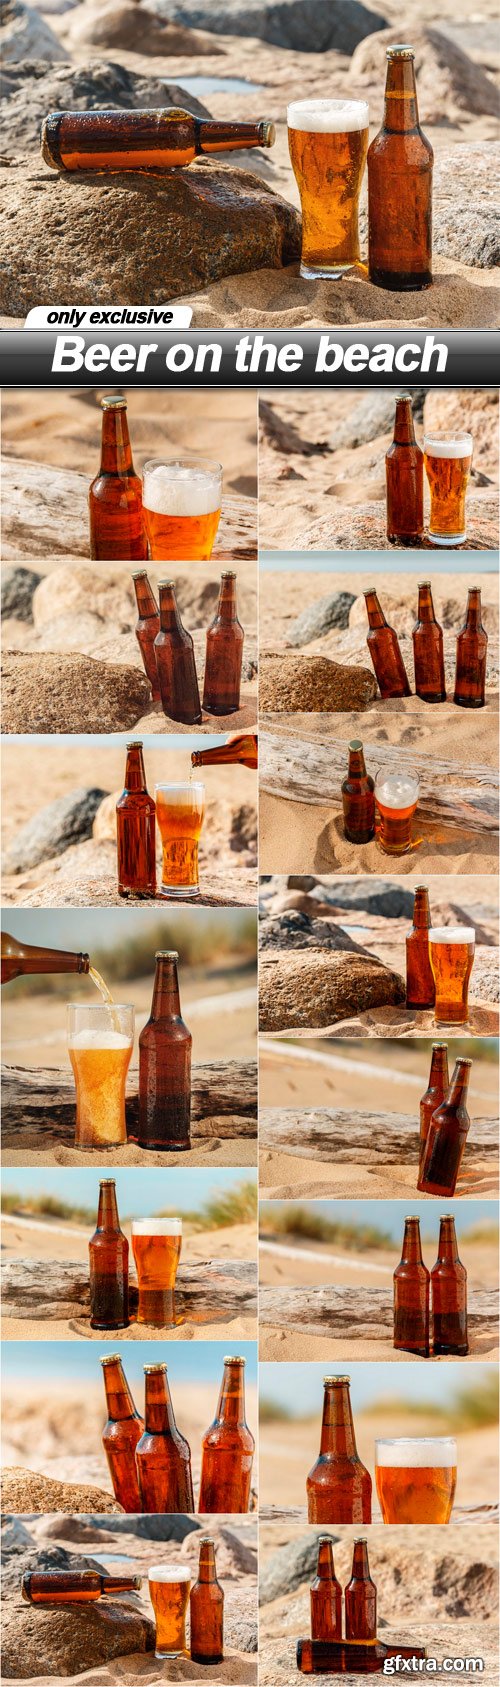 Beer on the beach - 15 UHQ JPEG